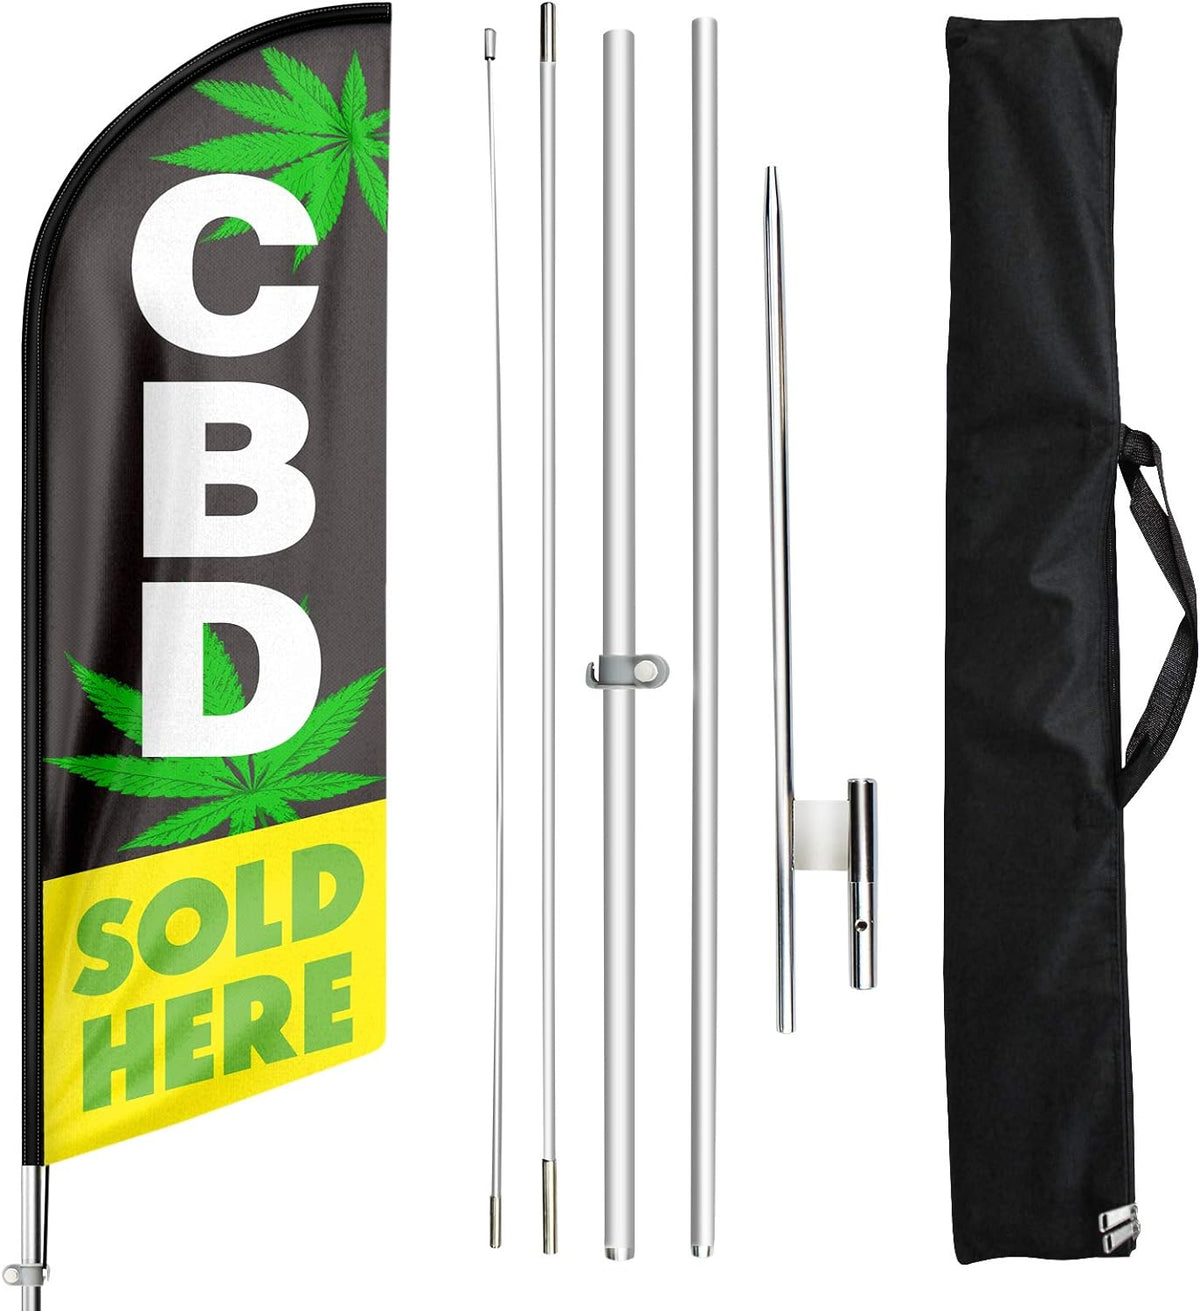 CBD Sold Here Feather Flag: Advertising Banner for CBD Business (11ft, Black)